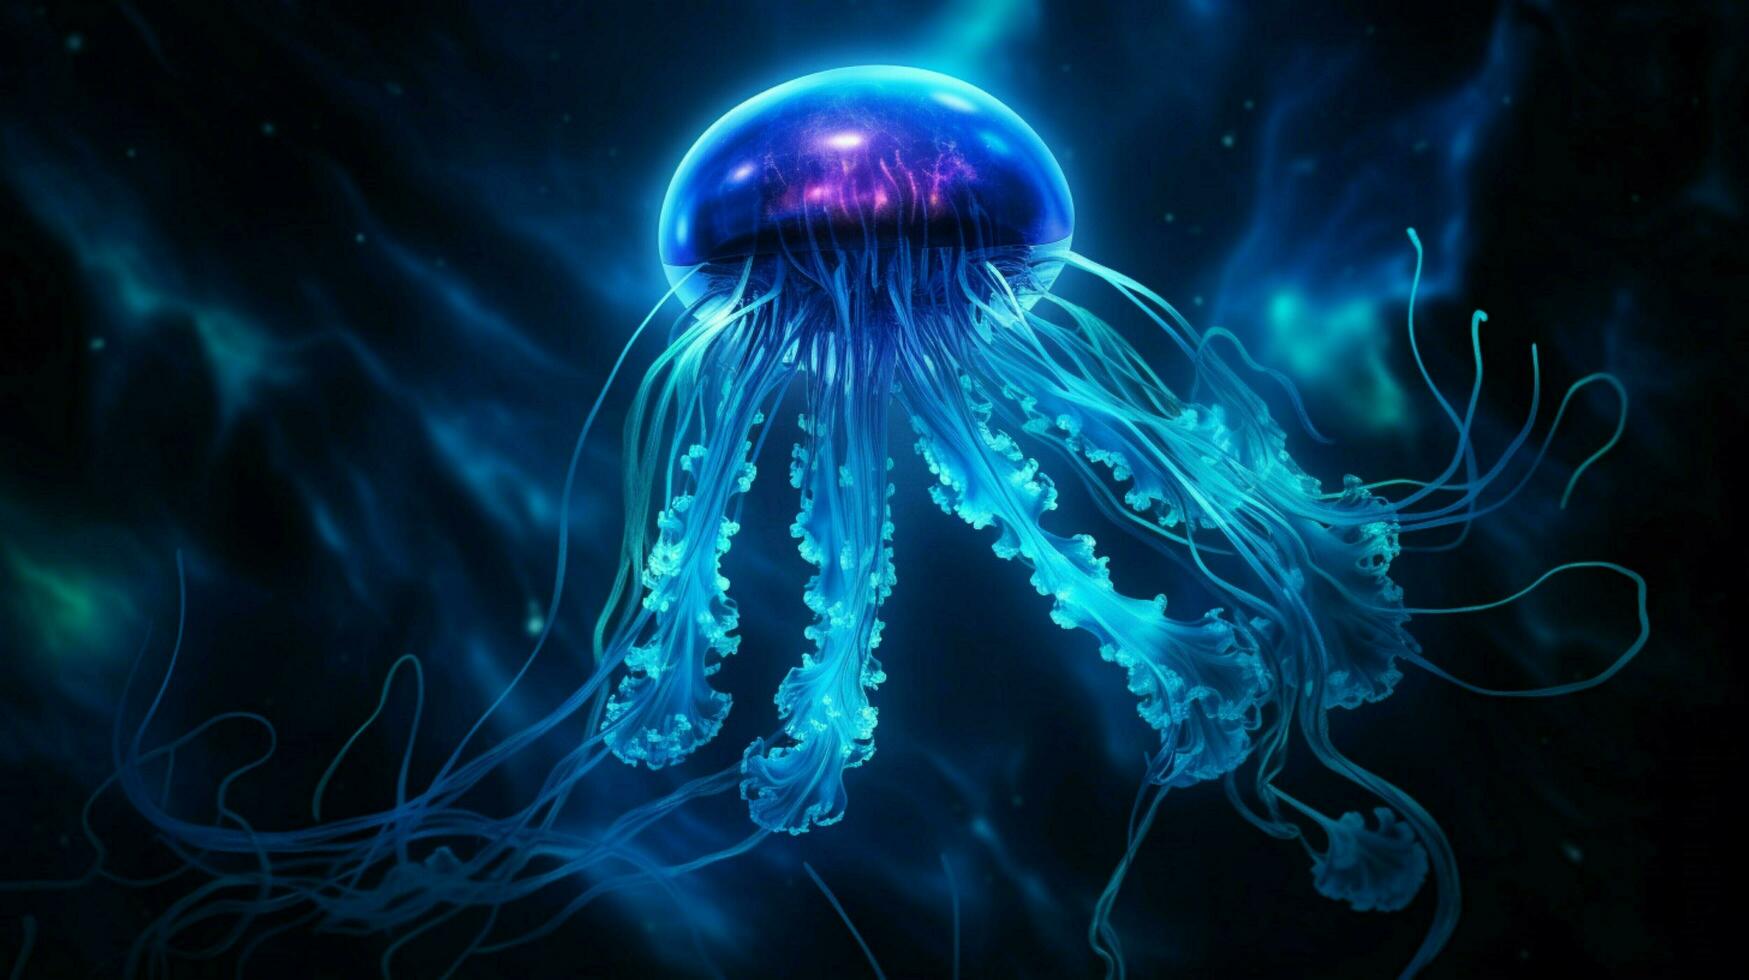 hd wallpaper neon glowing azure jellyfish frozen photo